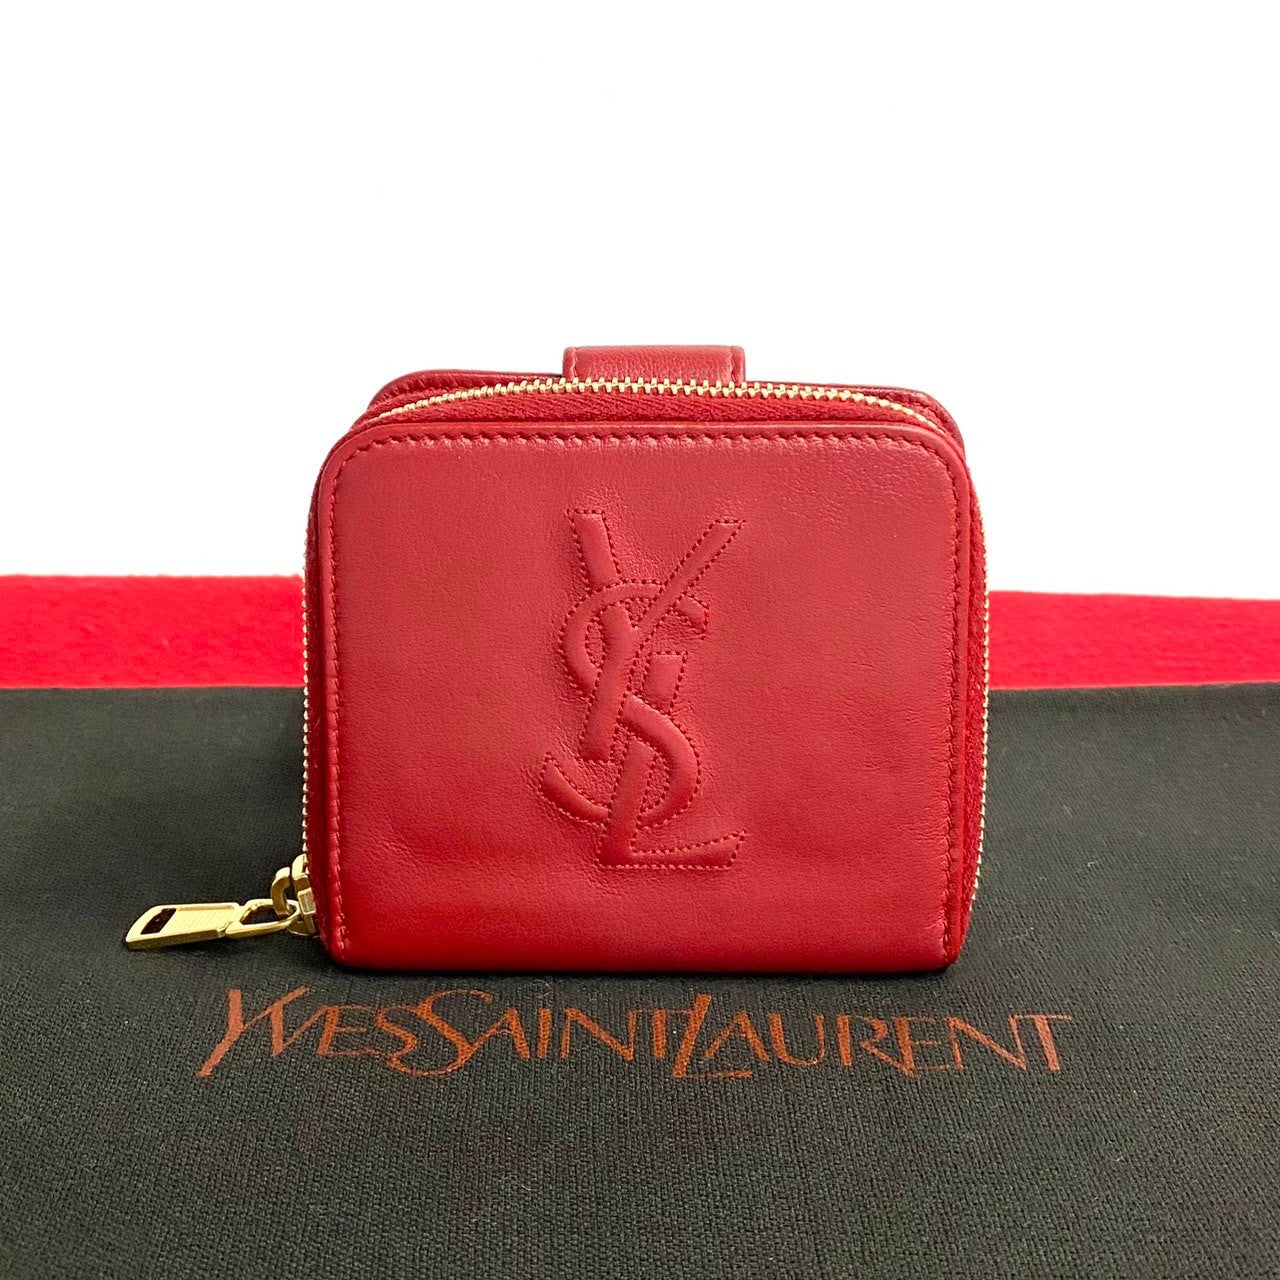 Yves Saint Laurent Leather Monogram Zip Around Wallet  Leather Short Wallet in Good condition